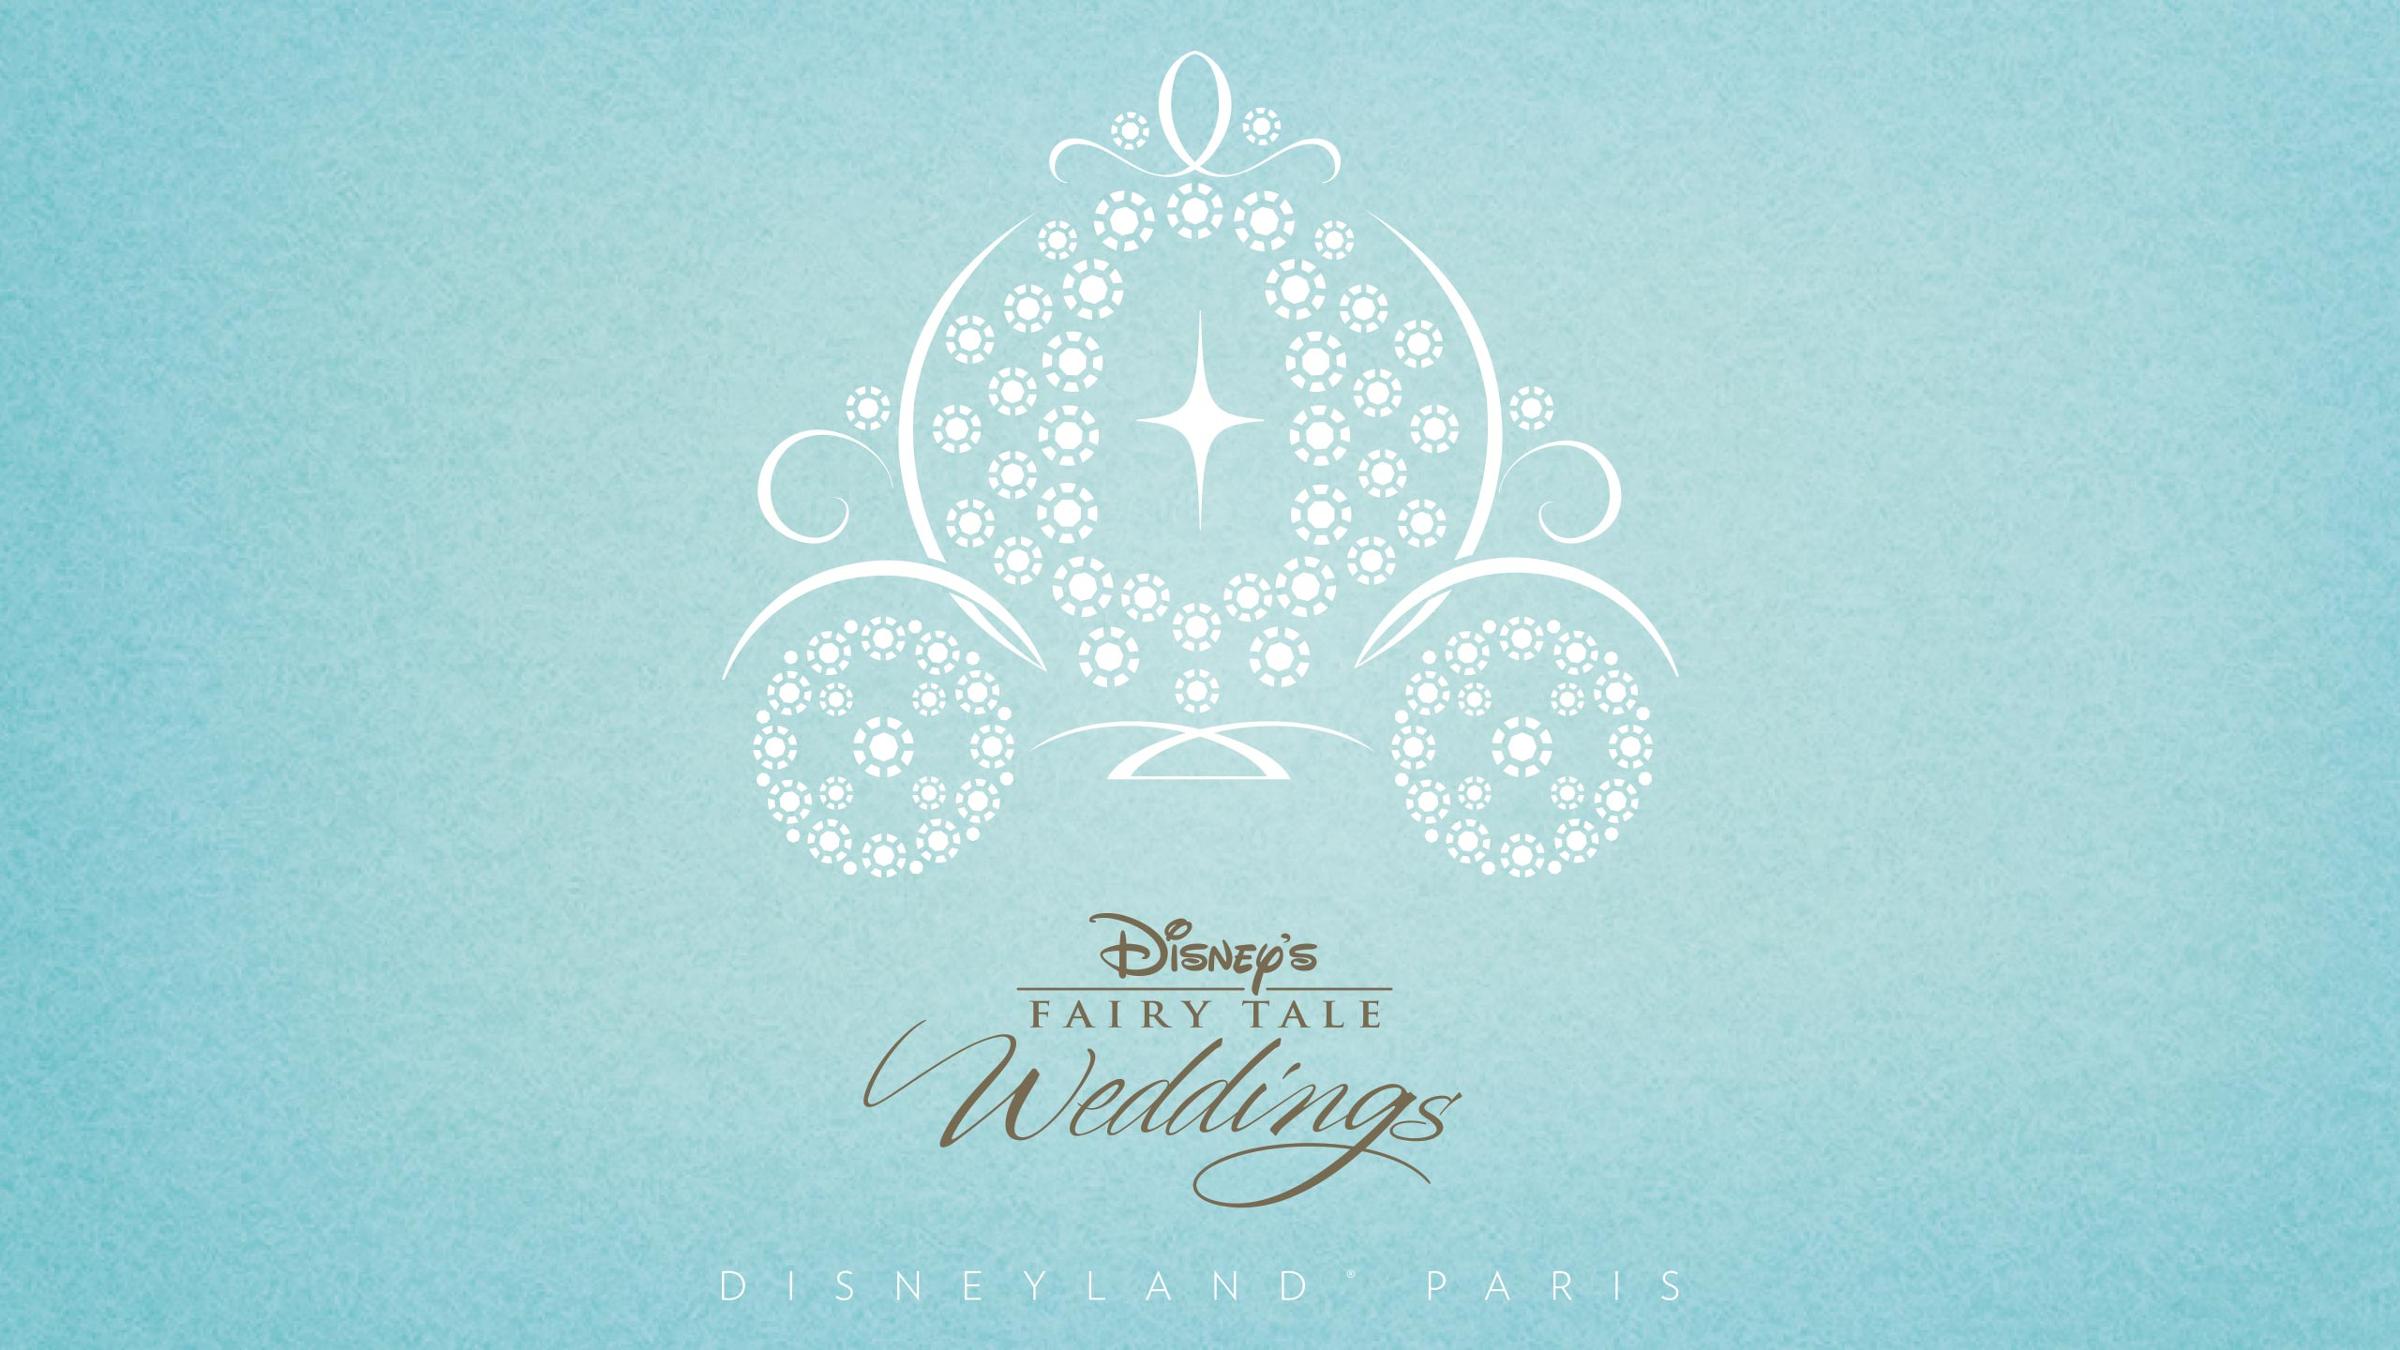 Celebrate Your Union Weddings Engagements Vow Renewal Disneyland Paris